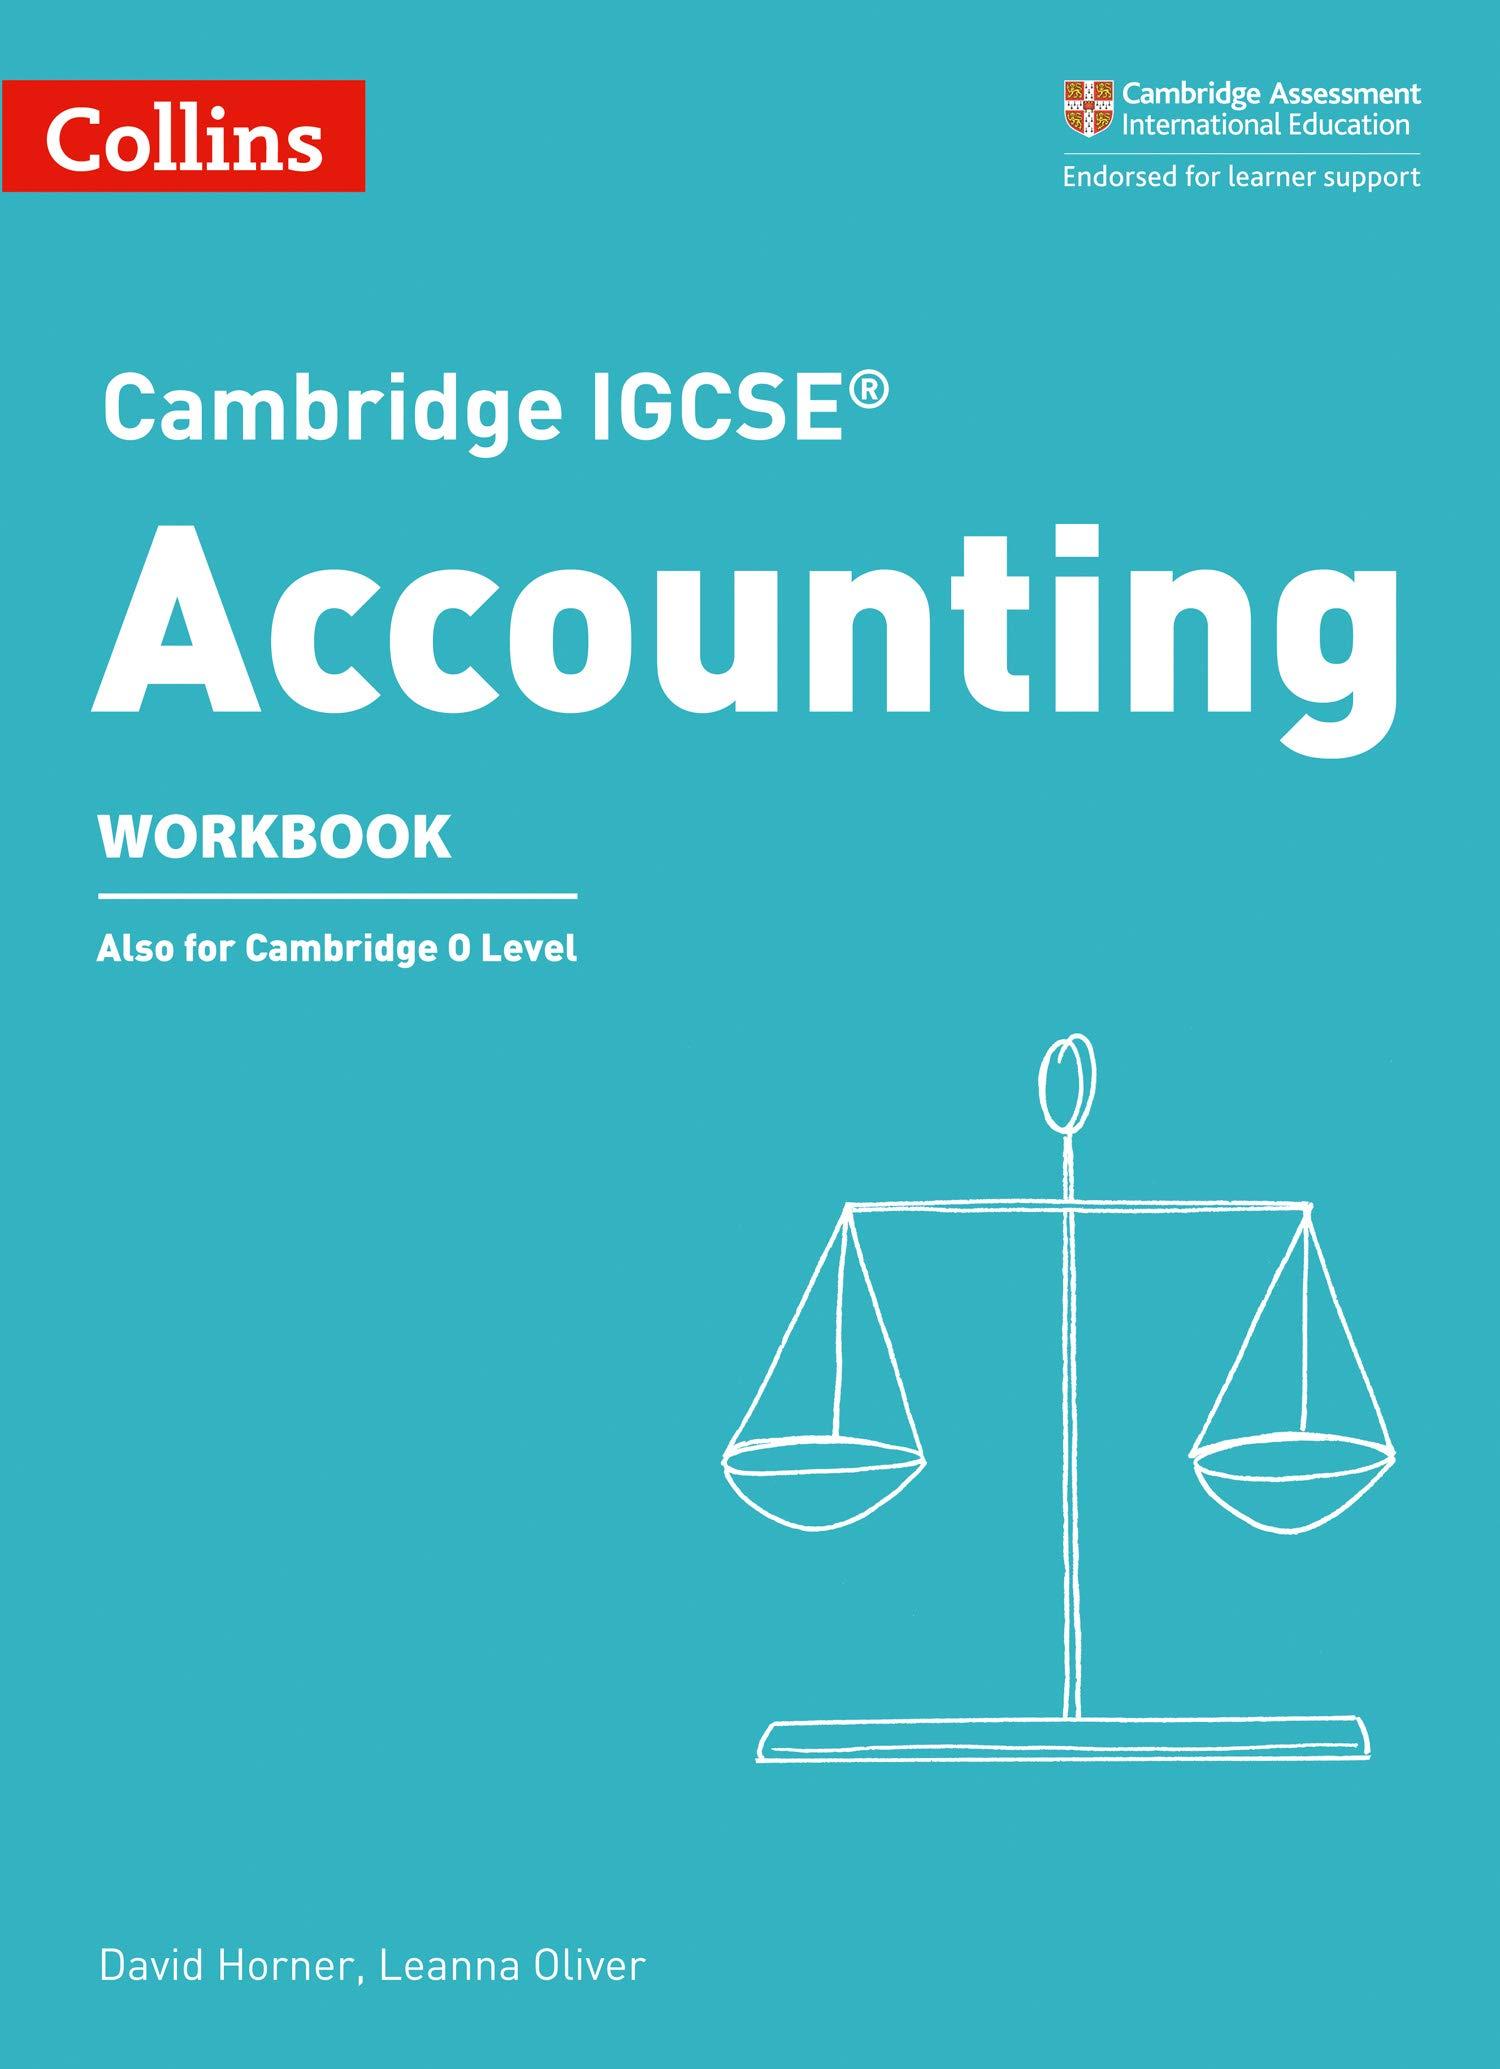 cambridge igcse accounting workbook 1st edition collins 0008254125, 978-0008254124